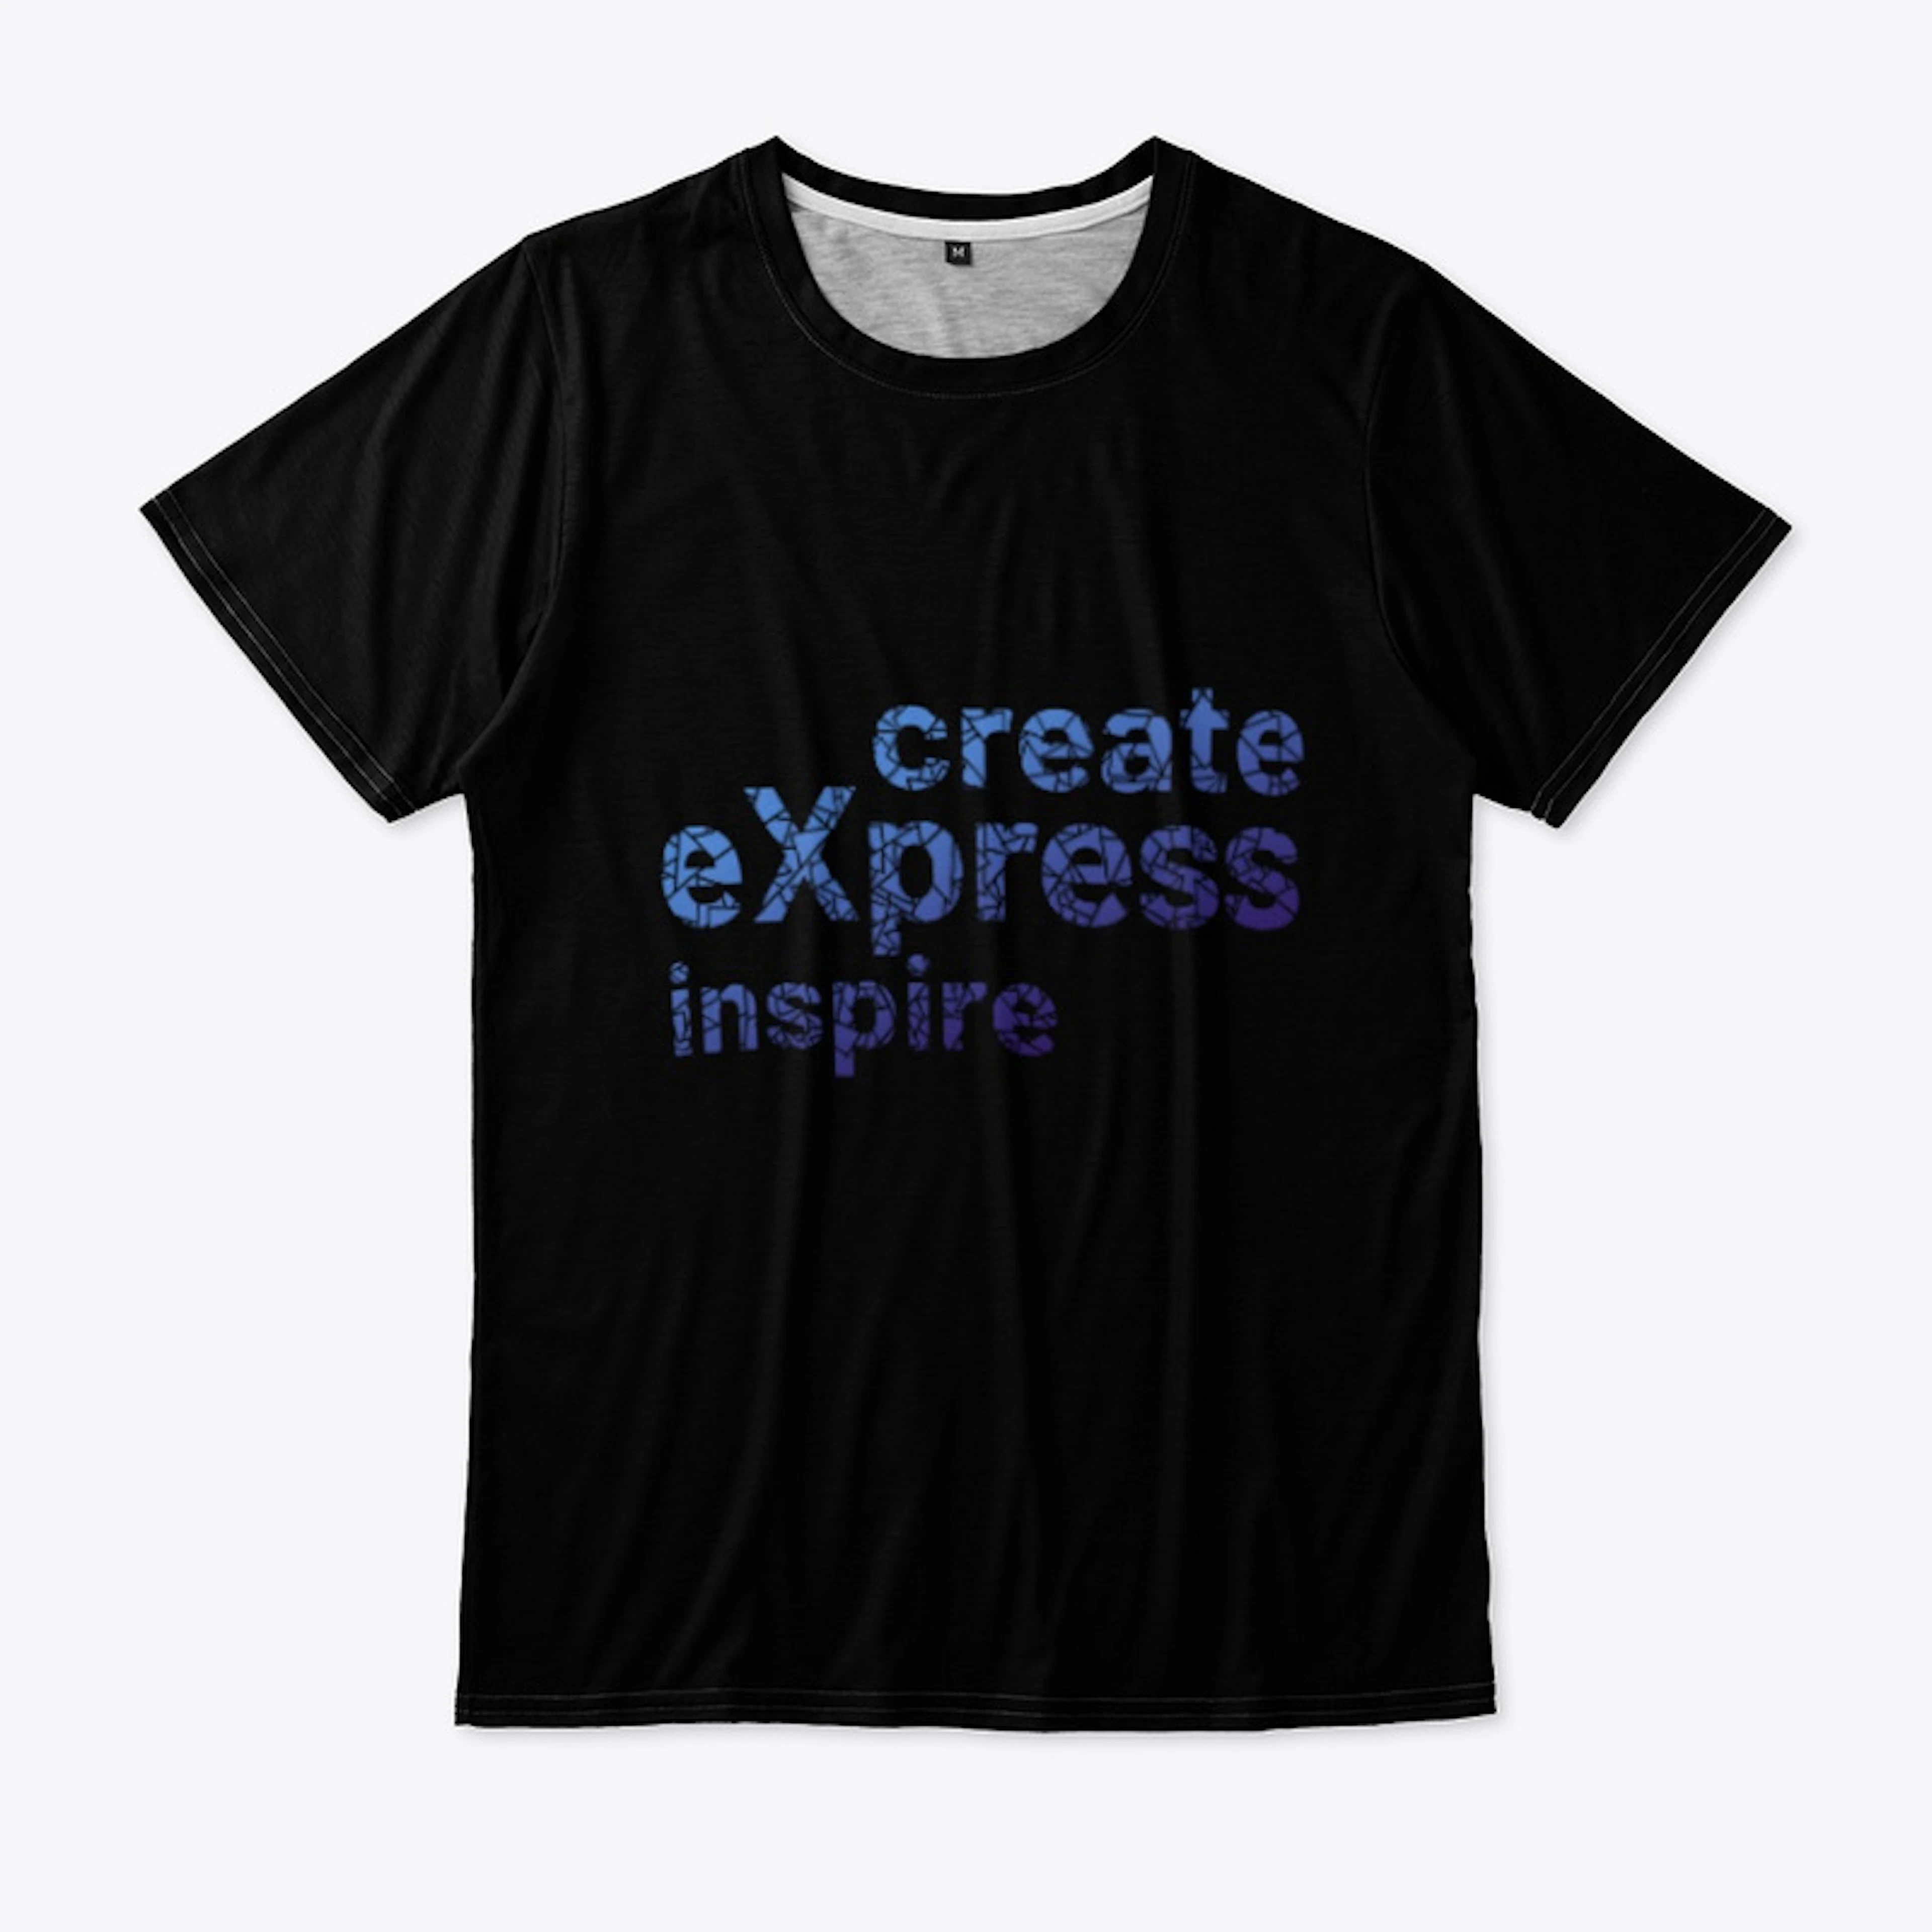 Create, express, inspire